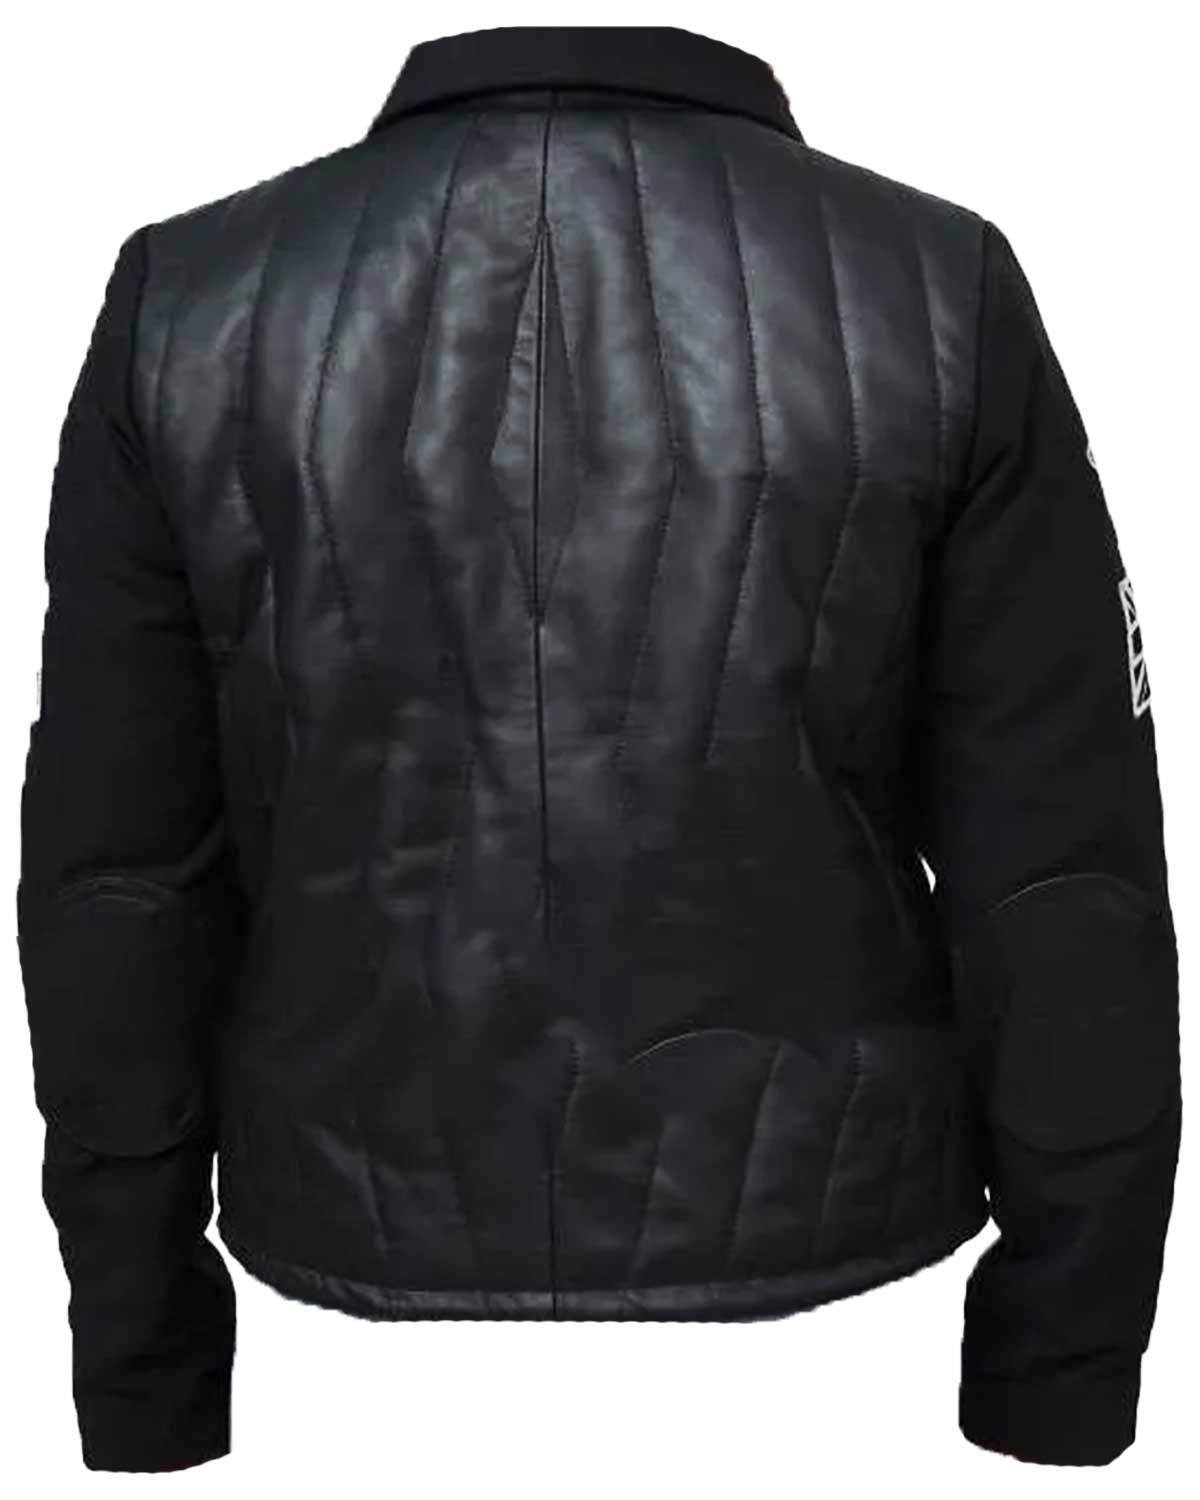 Elite Edge of Tomorrow Emily Blunt Leather Jacket